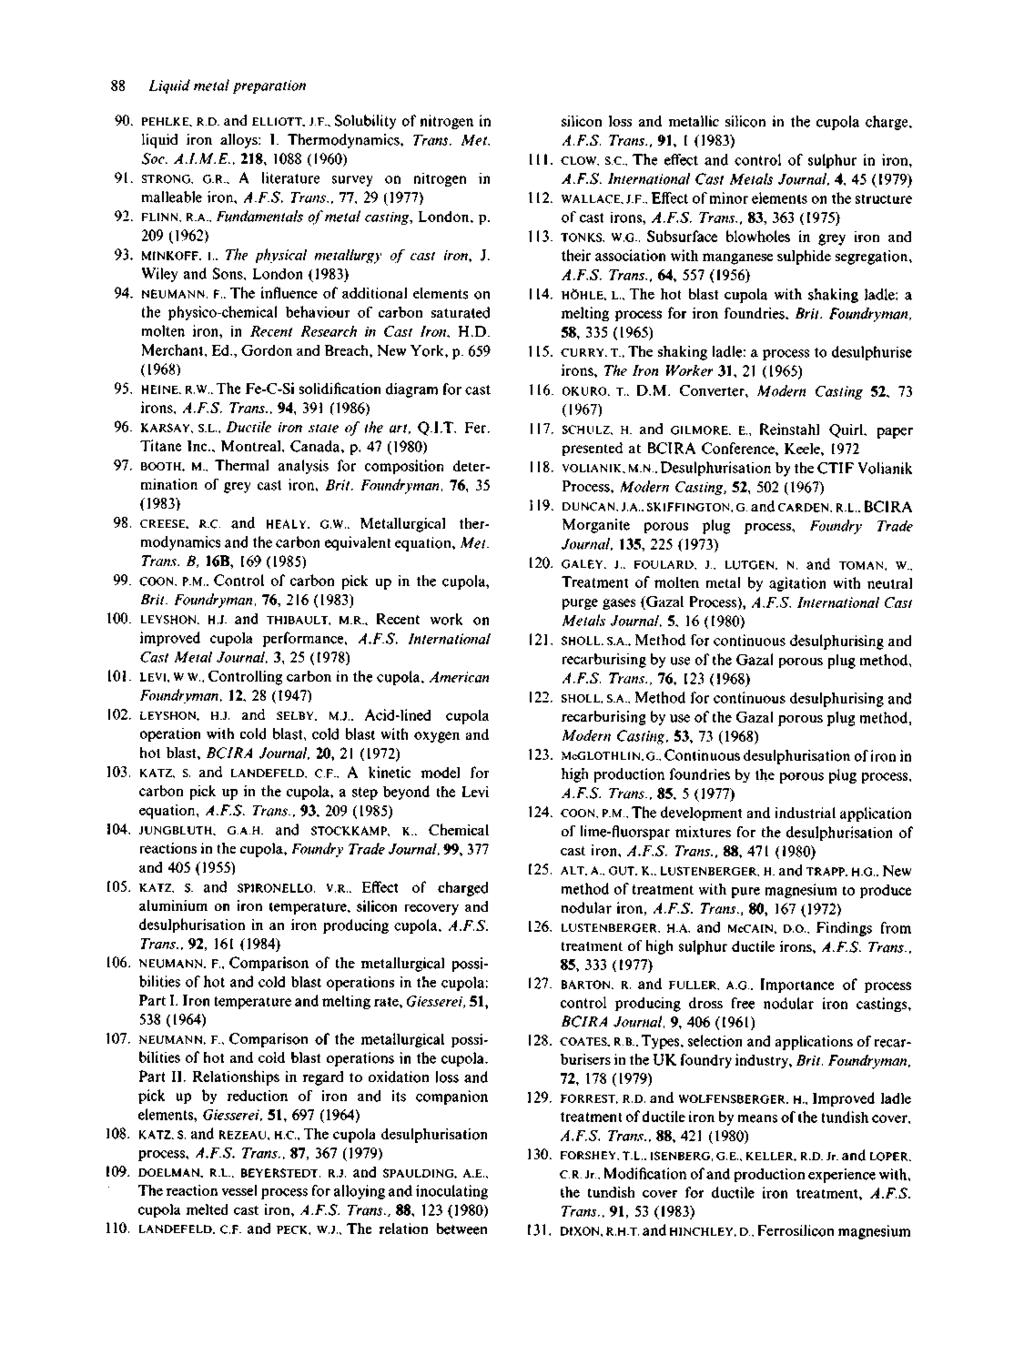 88 Liquid metal preparation 90. PEHLKE, R.D. and ELLIOTT, J.F.. Solubility of nitrogen in liquid iron alloys: I. Thermodynamics, Trans. Met. Soc. A.I.M.E., 218, 1088 (1960) 91. STRONG, G.R., A literature survey on nitrogen in malleable iron, A.